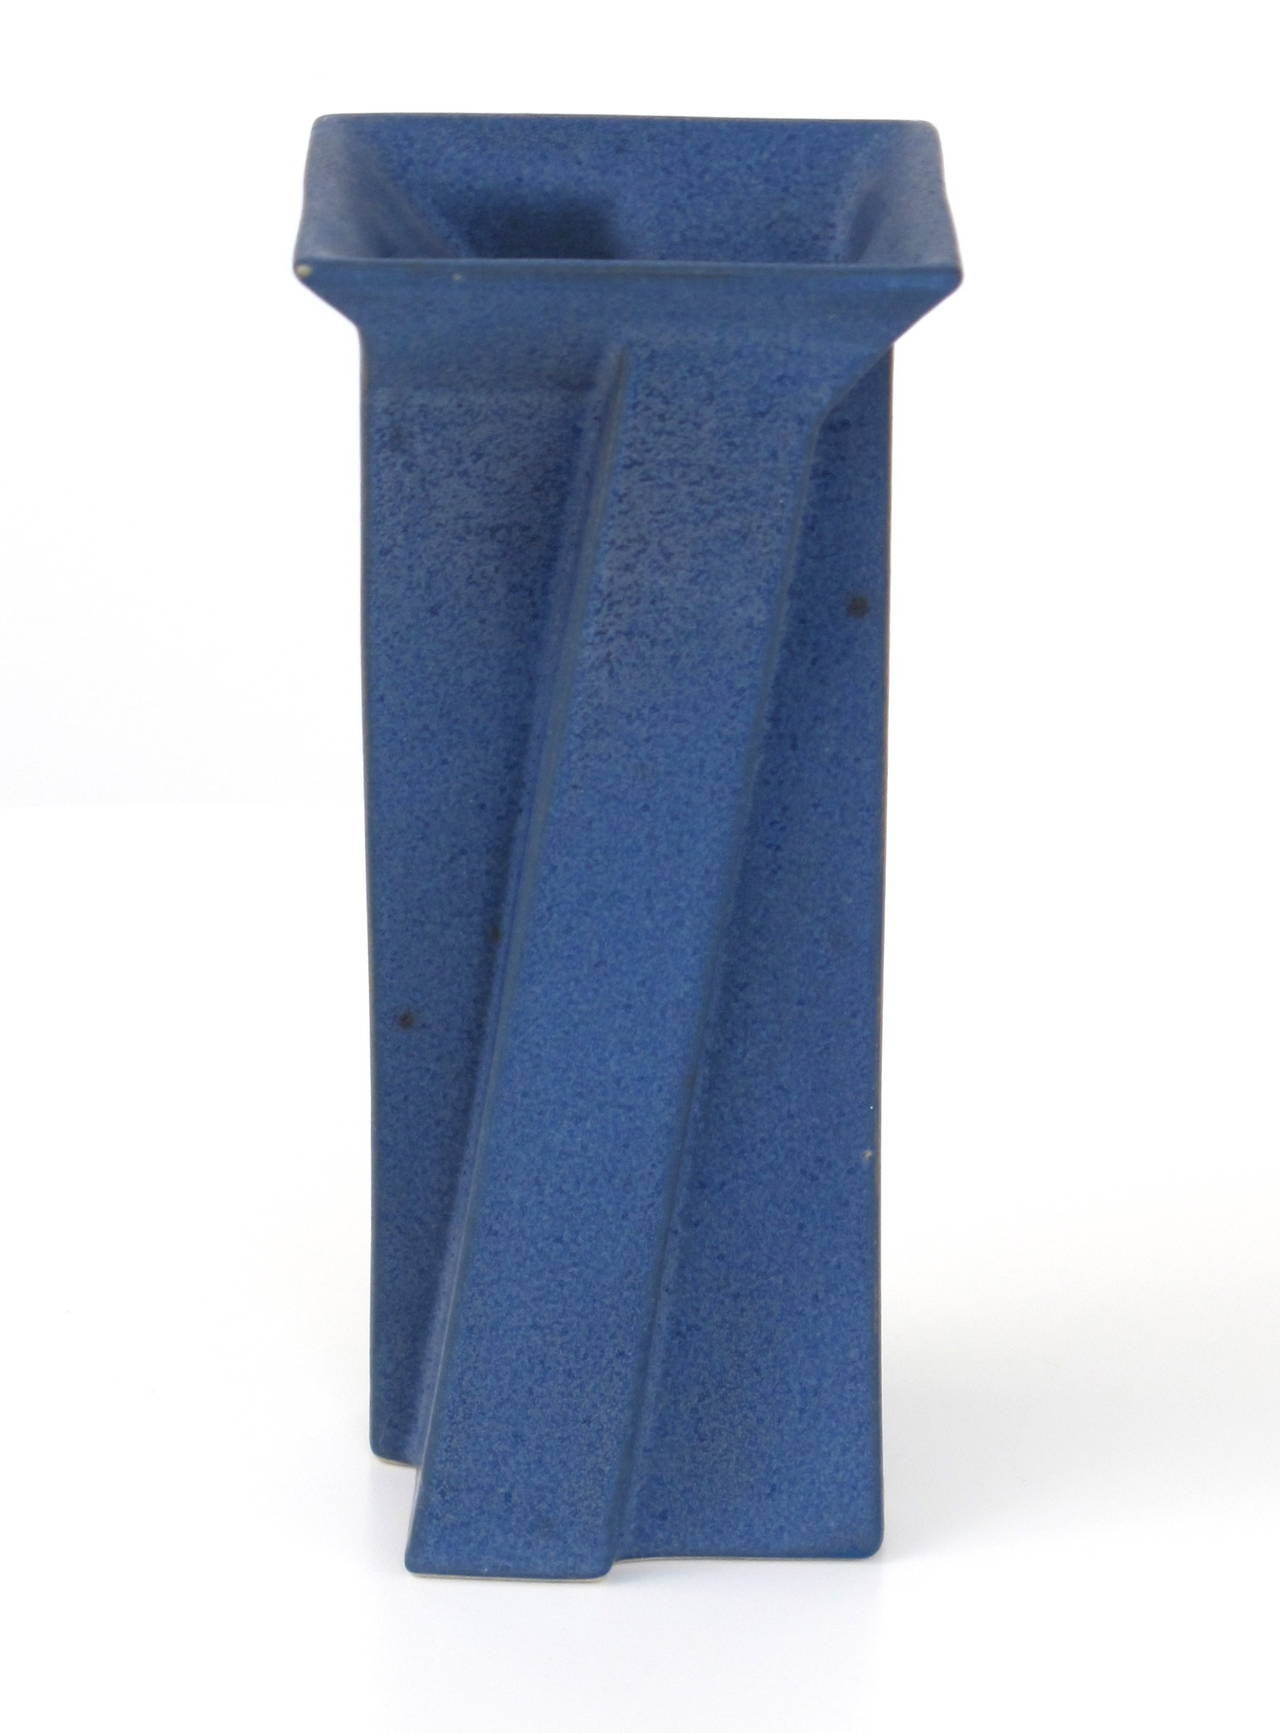 A beautiful blue glazed porcelain vase with geometric shape by Jan van der Vaart. This piece of Dutch avant-garde pottery was executed in 1999 in his own studio. The vase is signed on the bottom: ' 99 VD VAART'.

Jan van der Vaart (1931-2000) was an